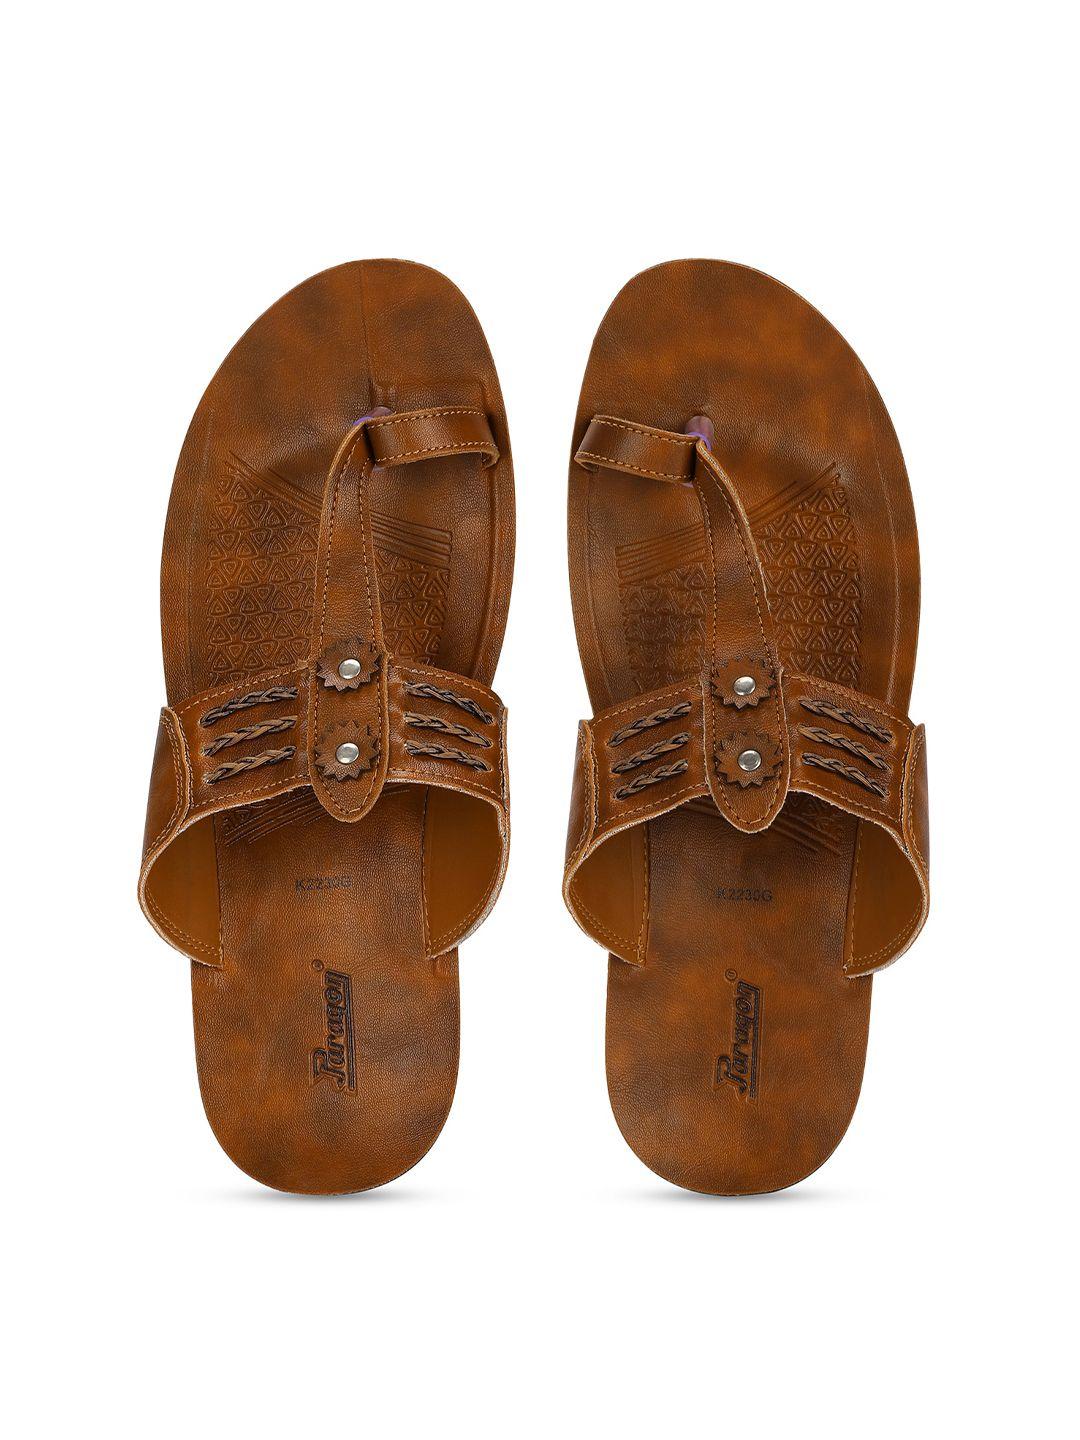 paragon-men-anti-skid-sole-&-sturdy-construction-ethnic-comfort-sandals